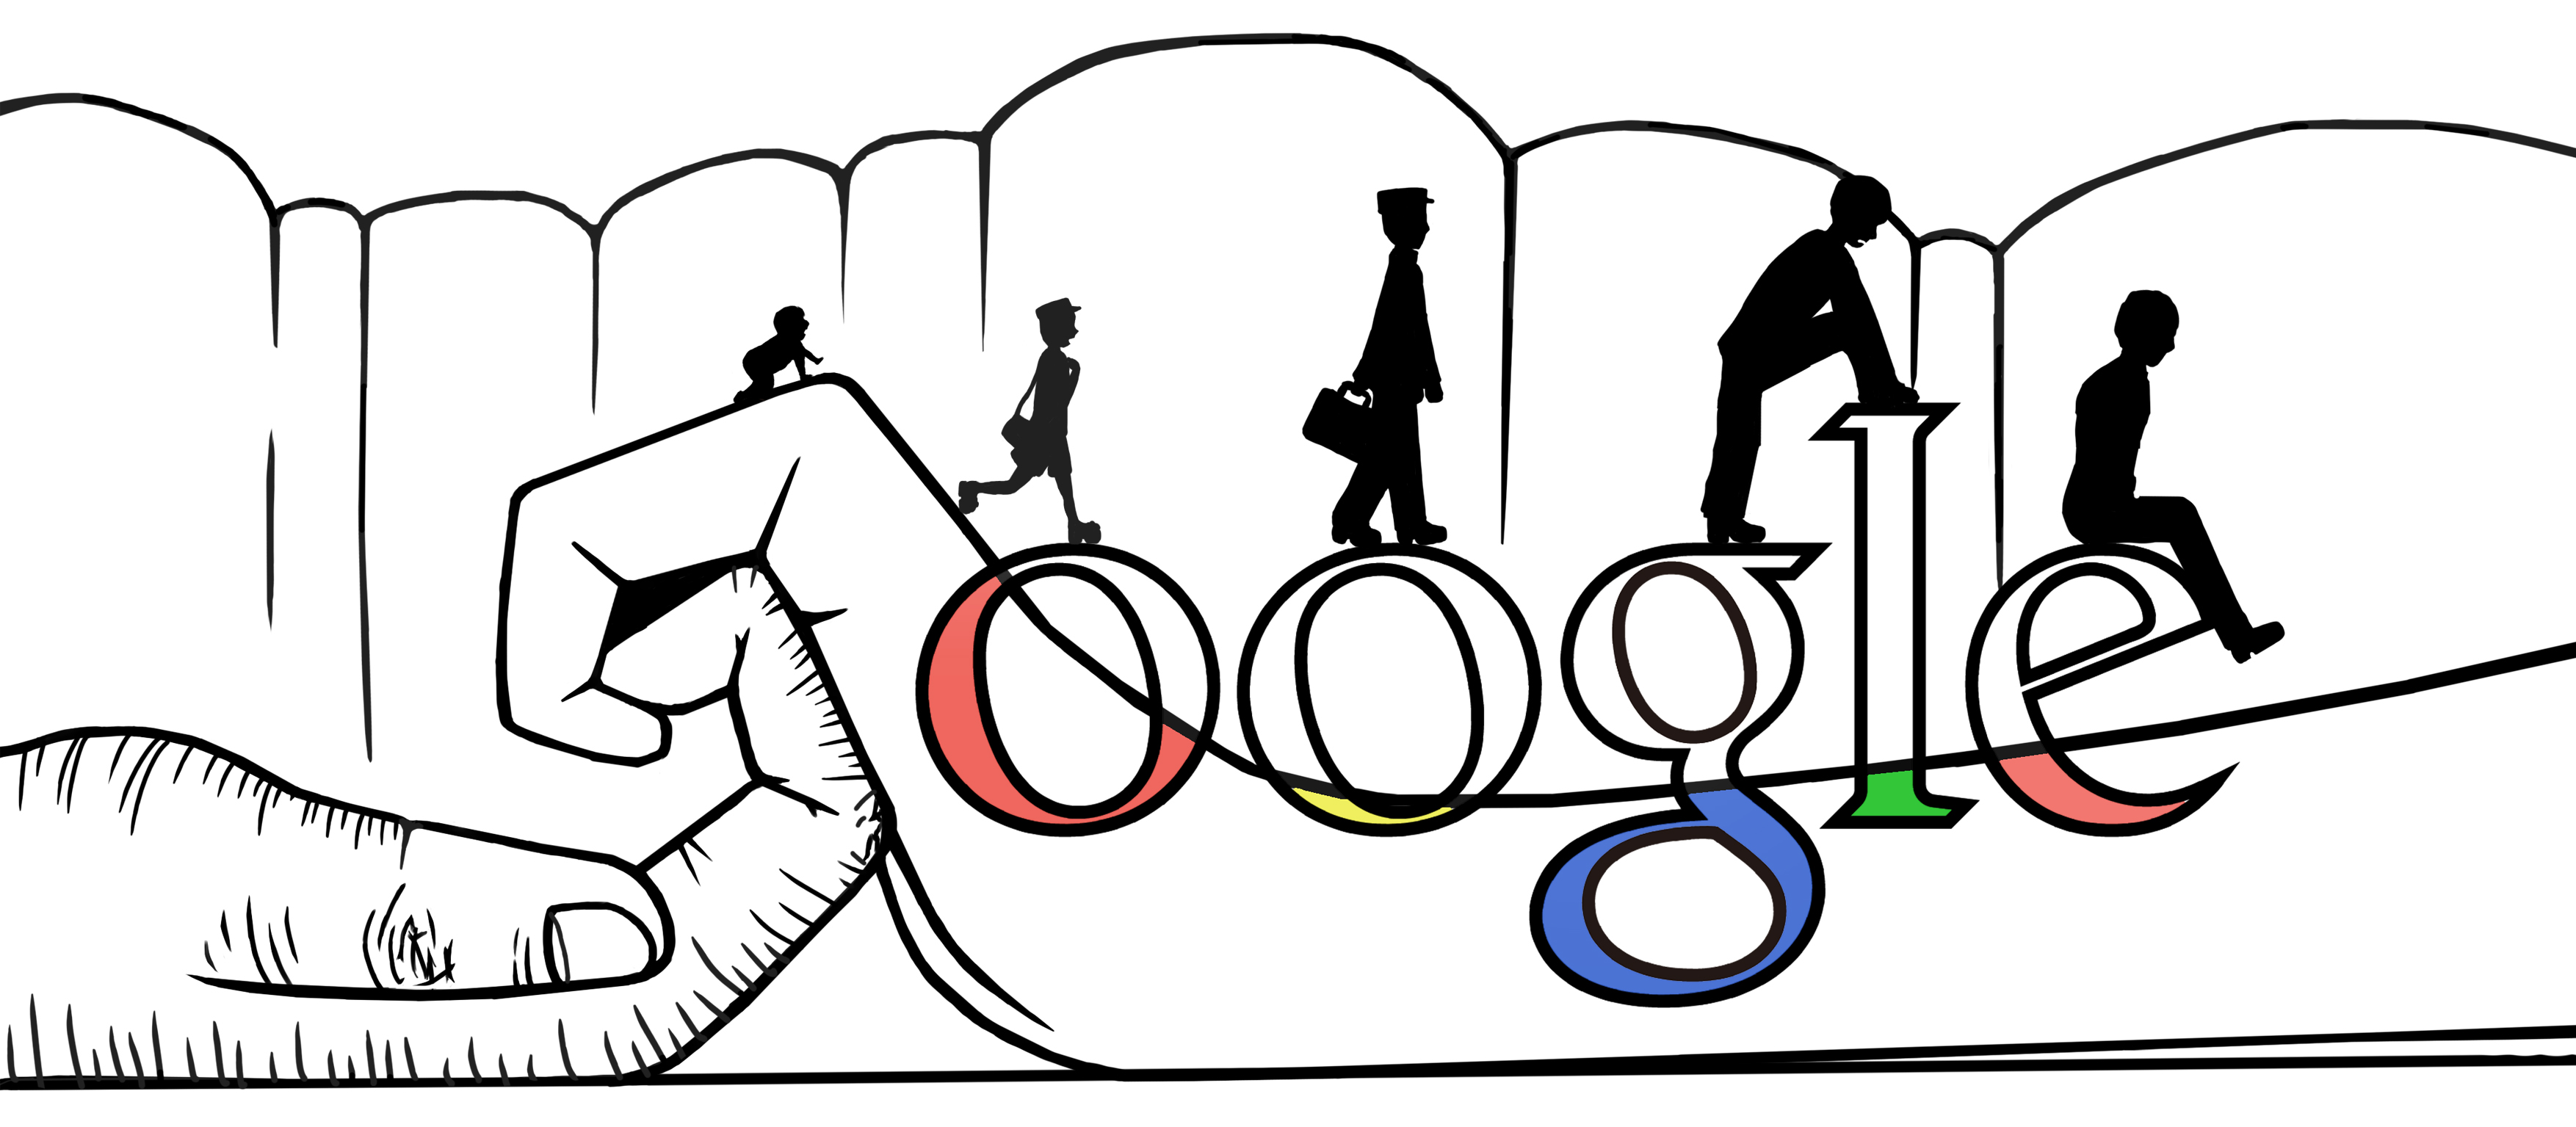 Doodle 4 Google 2014